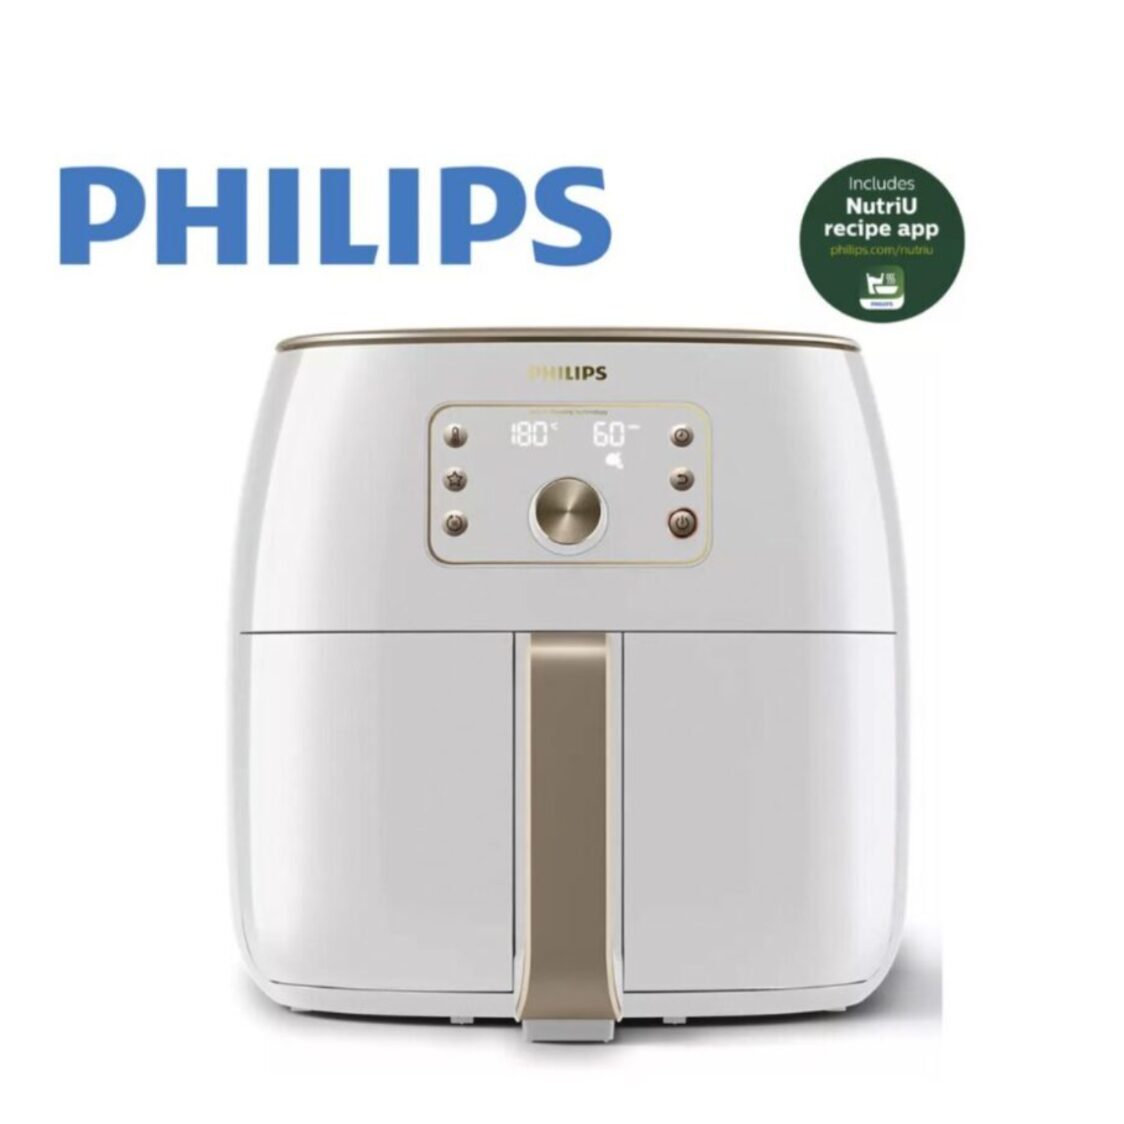 PHILIPS Premium Airfryer XXL with Smart Sensing Technology - White  (HD9870/20) Metro Department Store